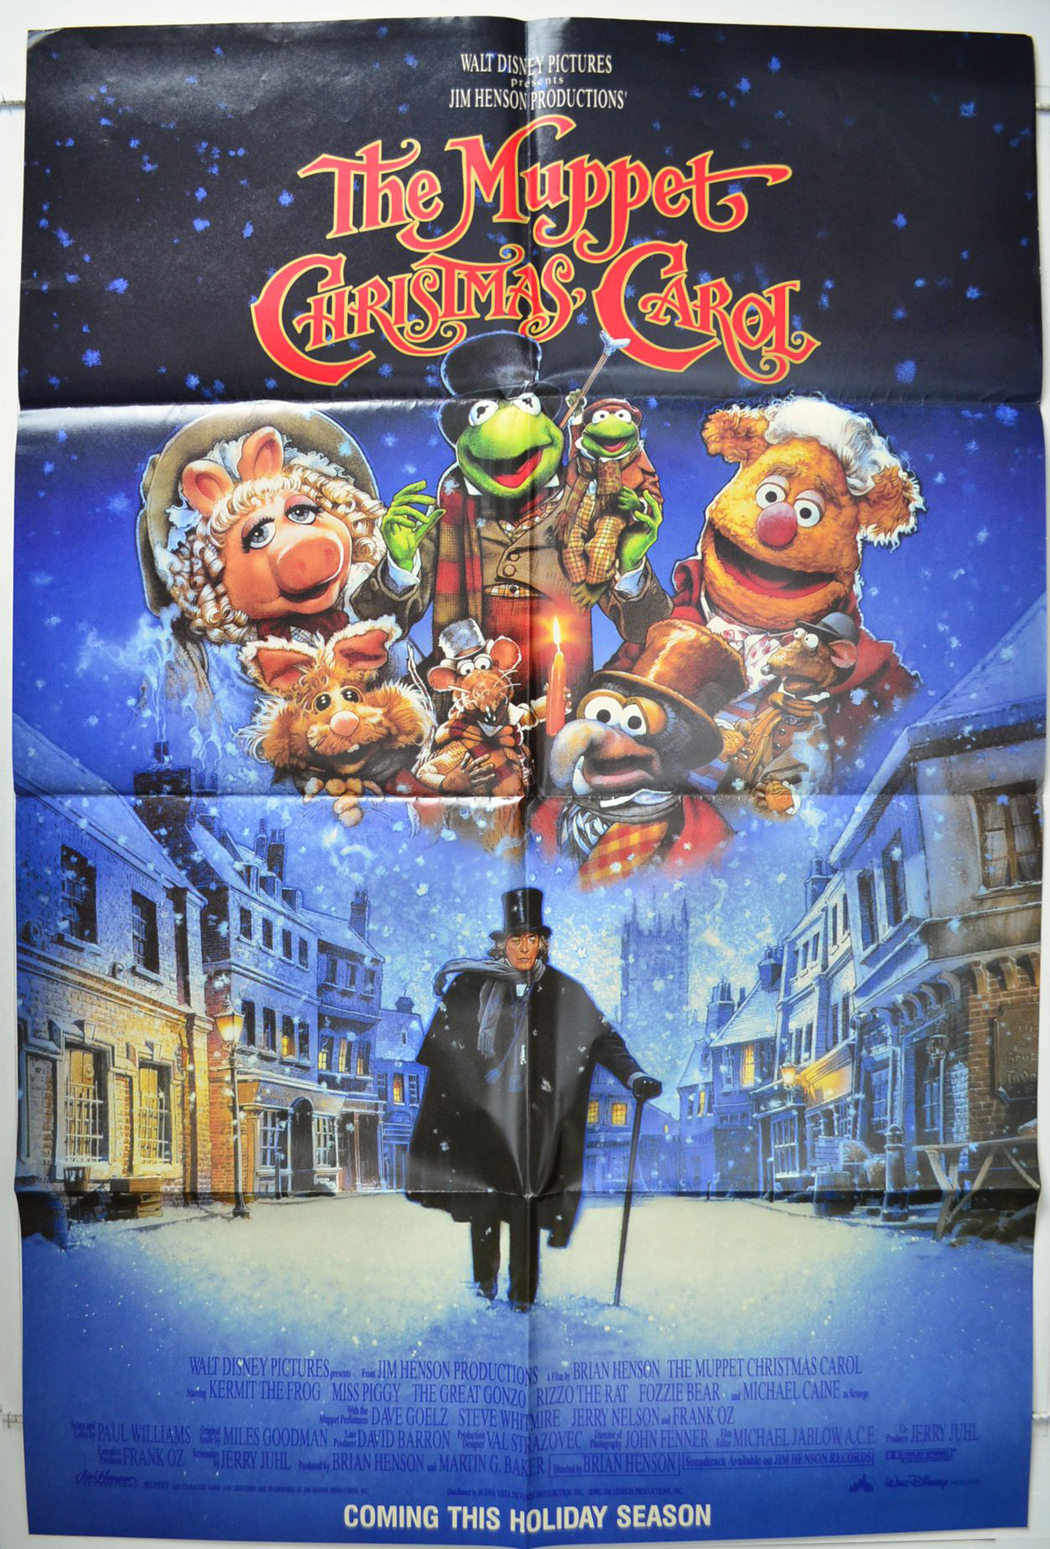 THE MUPPET CHRISTMAS CAROL (1992) Original Subway One Sheet Film Poster - Henson | eBay